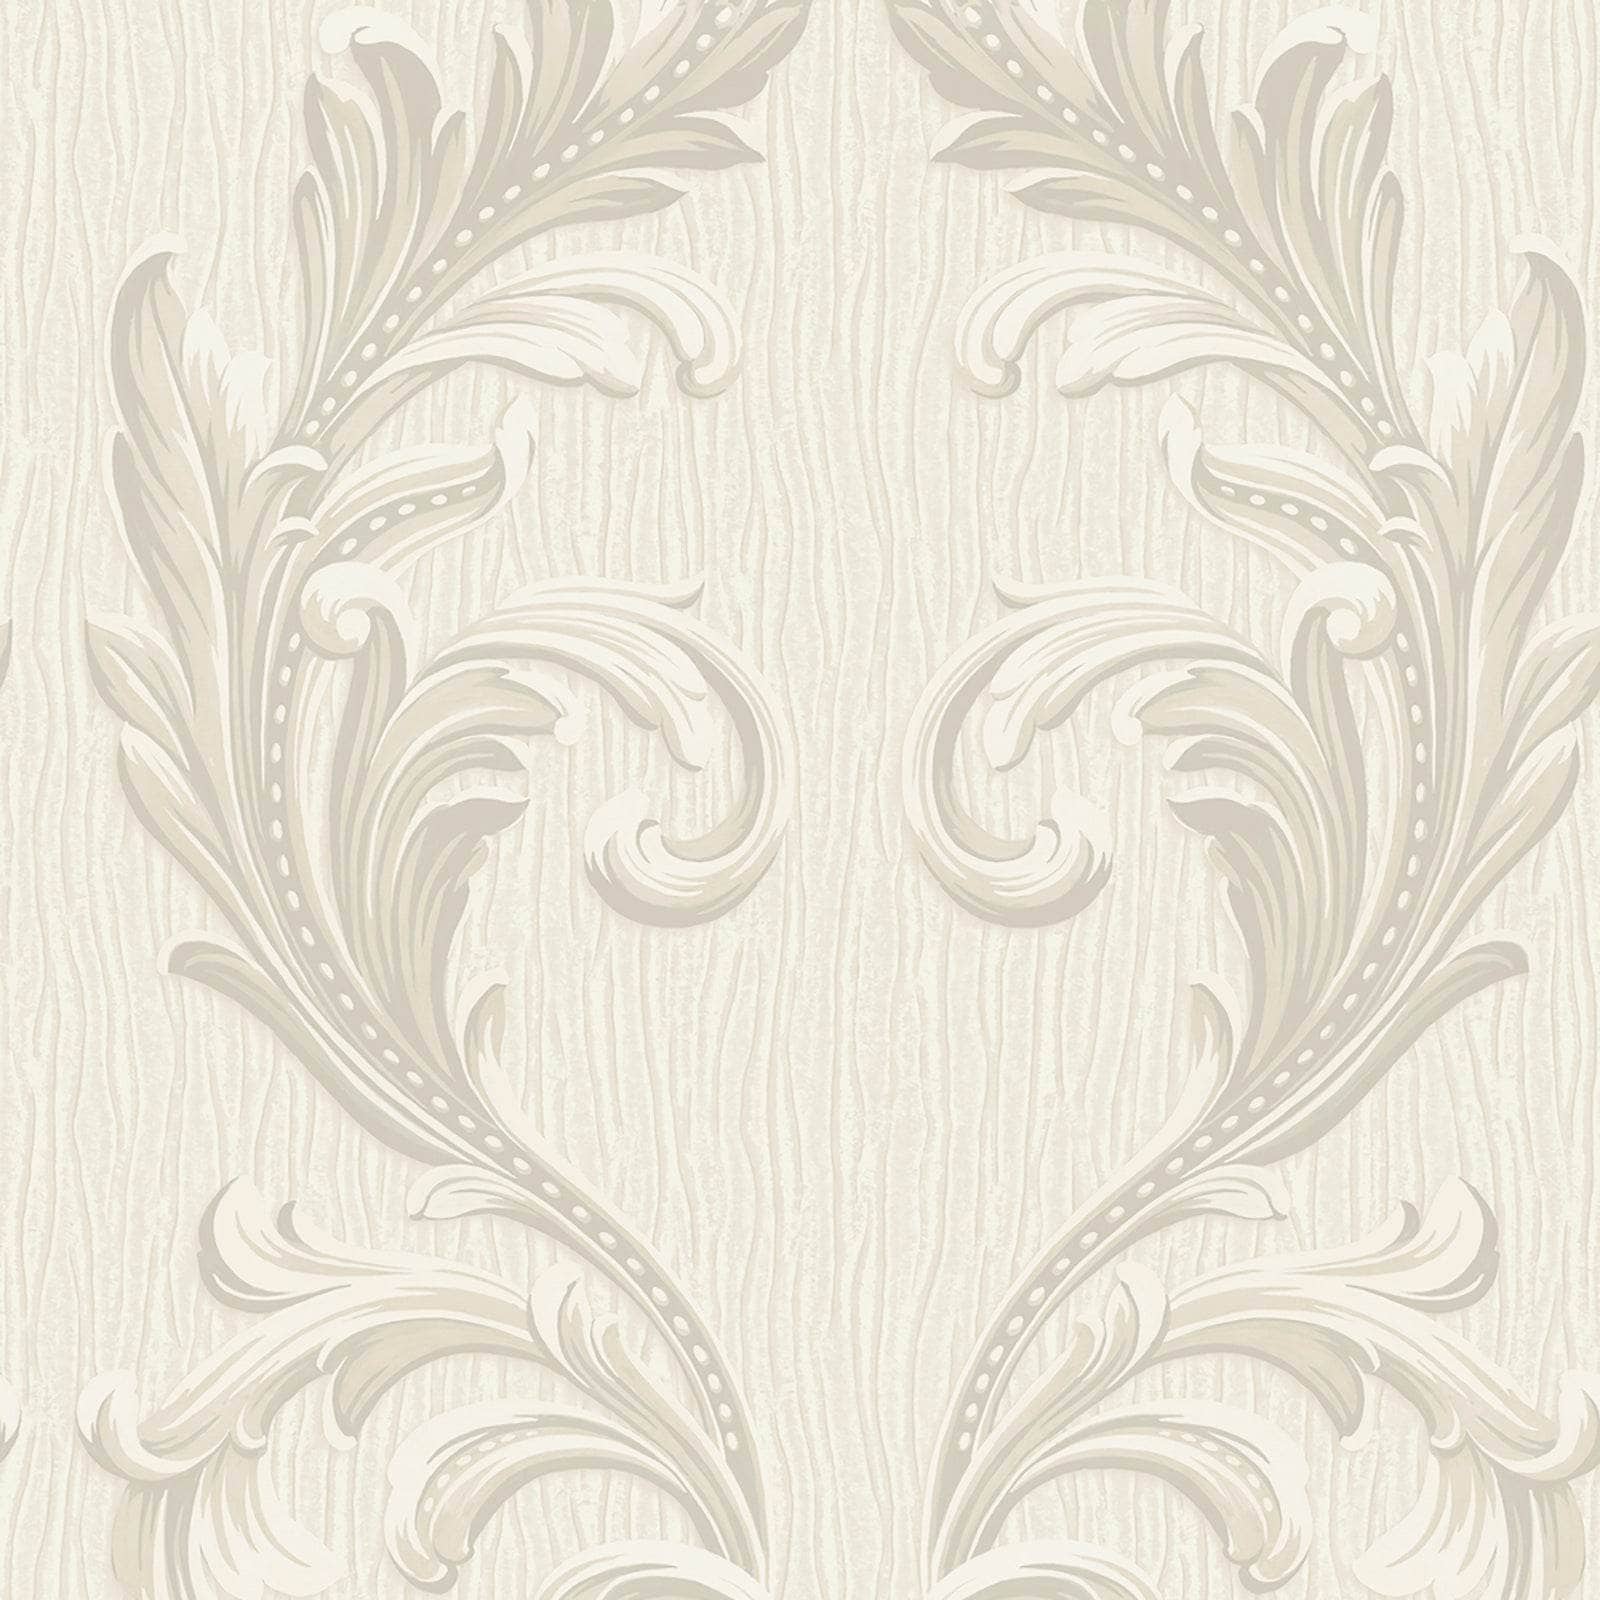 Wallpaper  -  Belgravia Tiffany Cream Scroll Wallpaper - 60005529  -  60005529